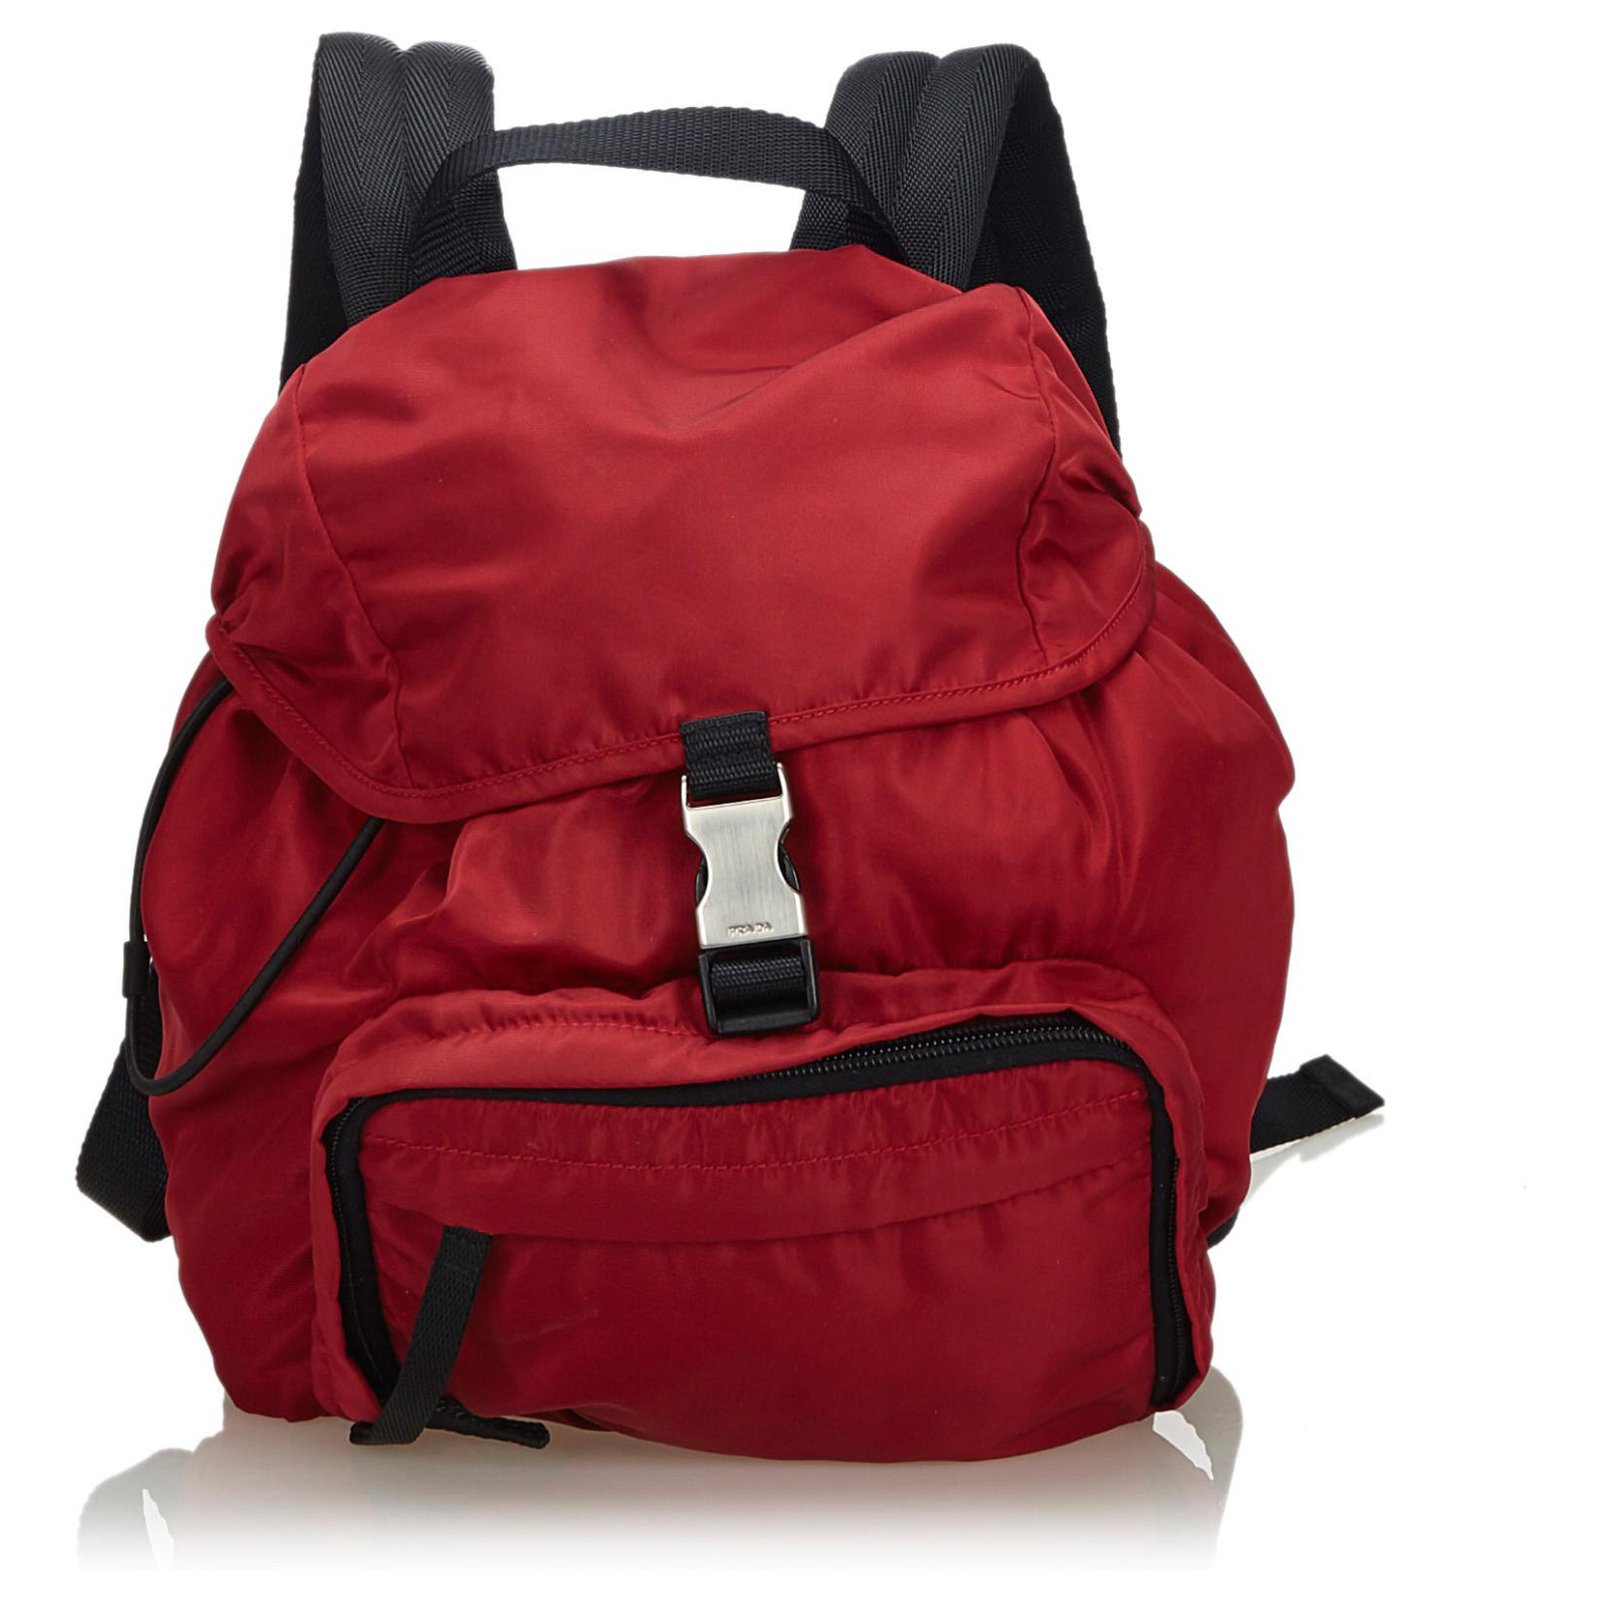 prada red backpack